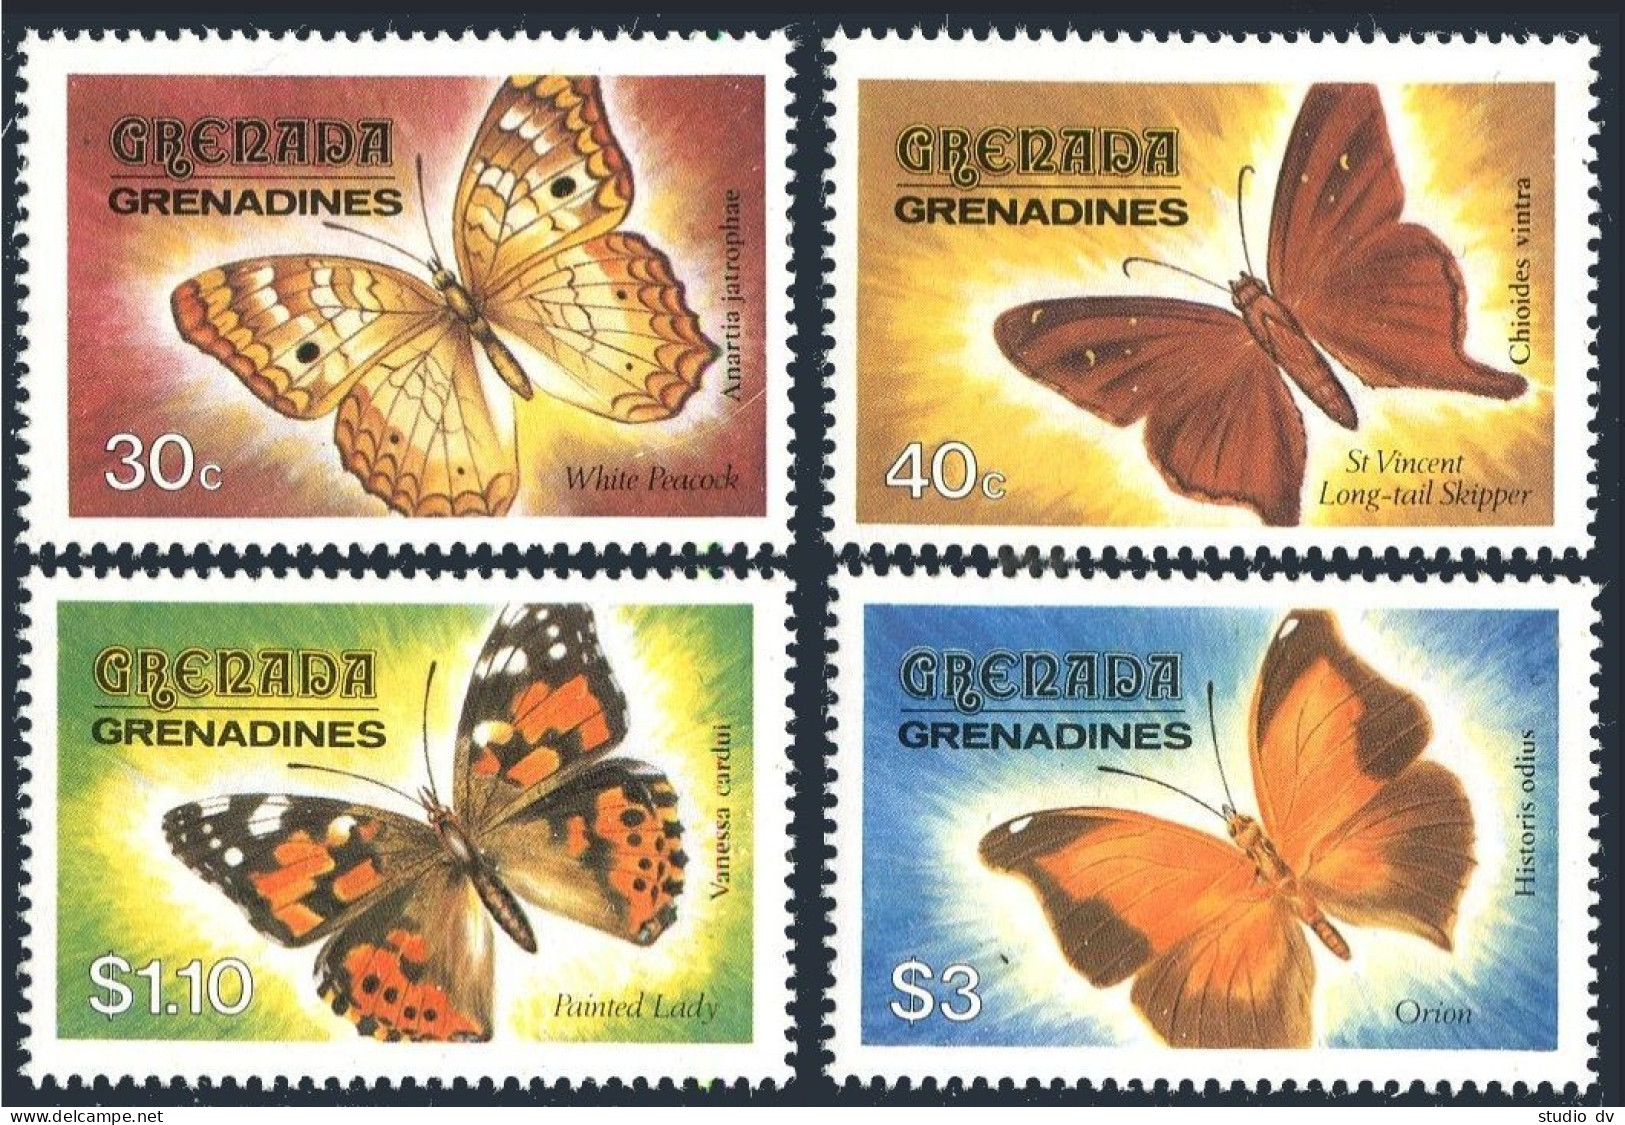 Grenada Gren 480-483, MNH. Michel 490-493. Butterflies 1982. - Grenade (1974-...)